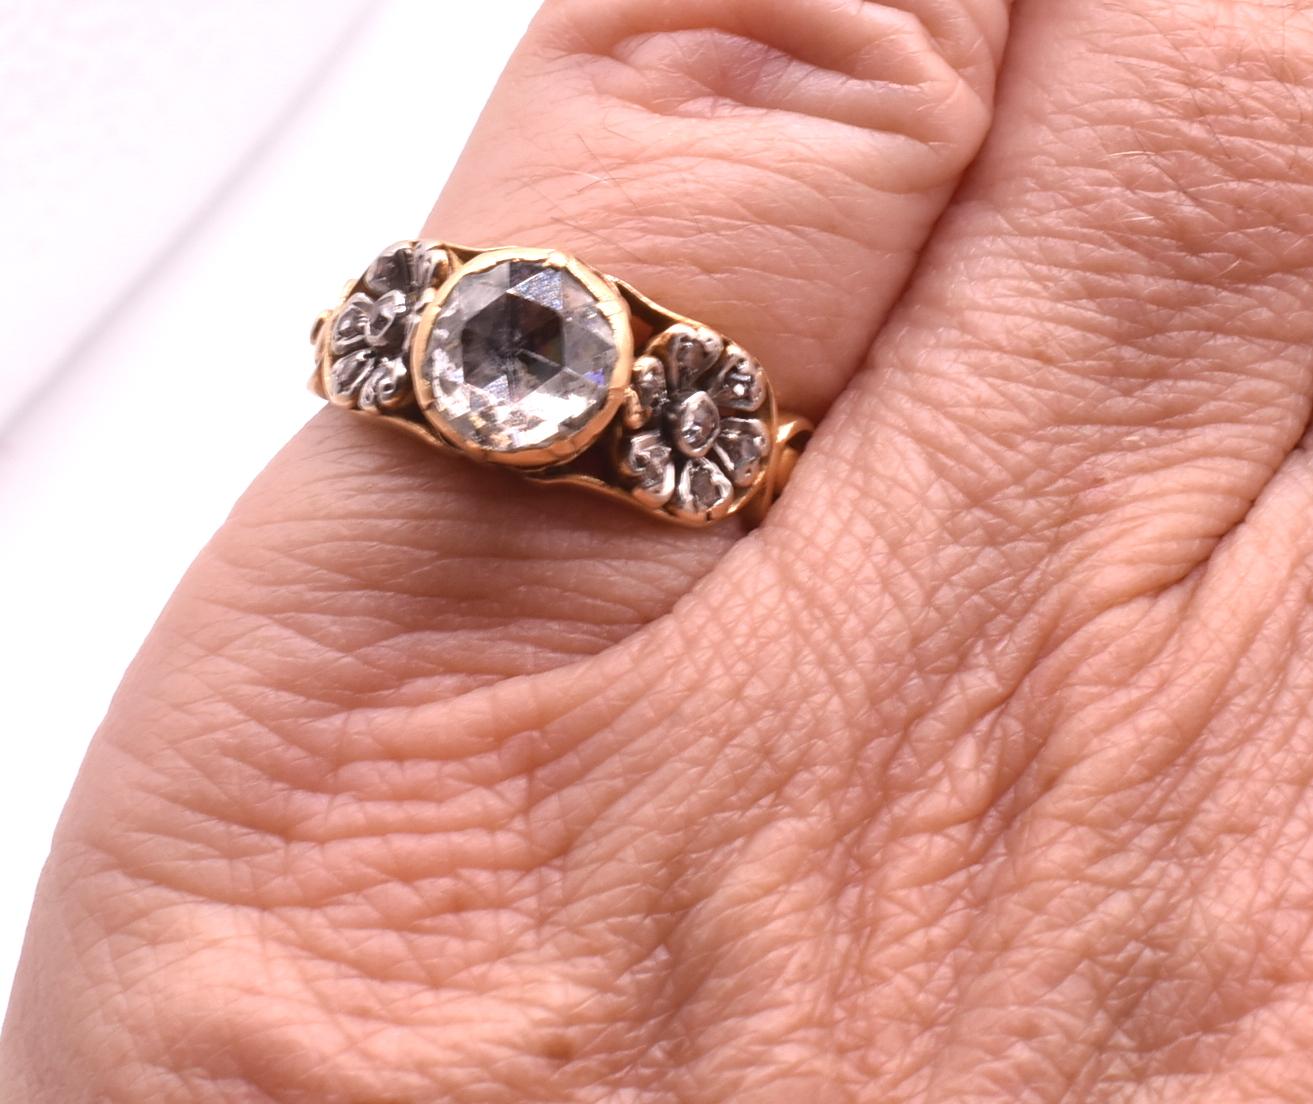 Antique Gold Rose Cut Diamond Ring with Platinum Floral Shoulders, C1895 6